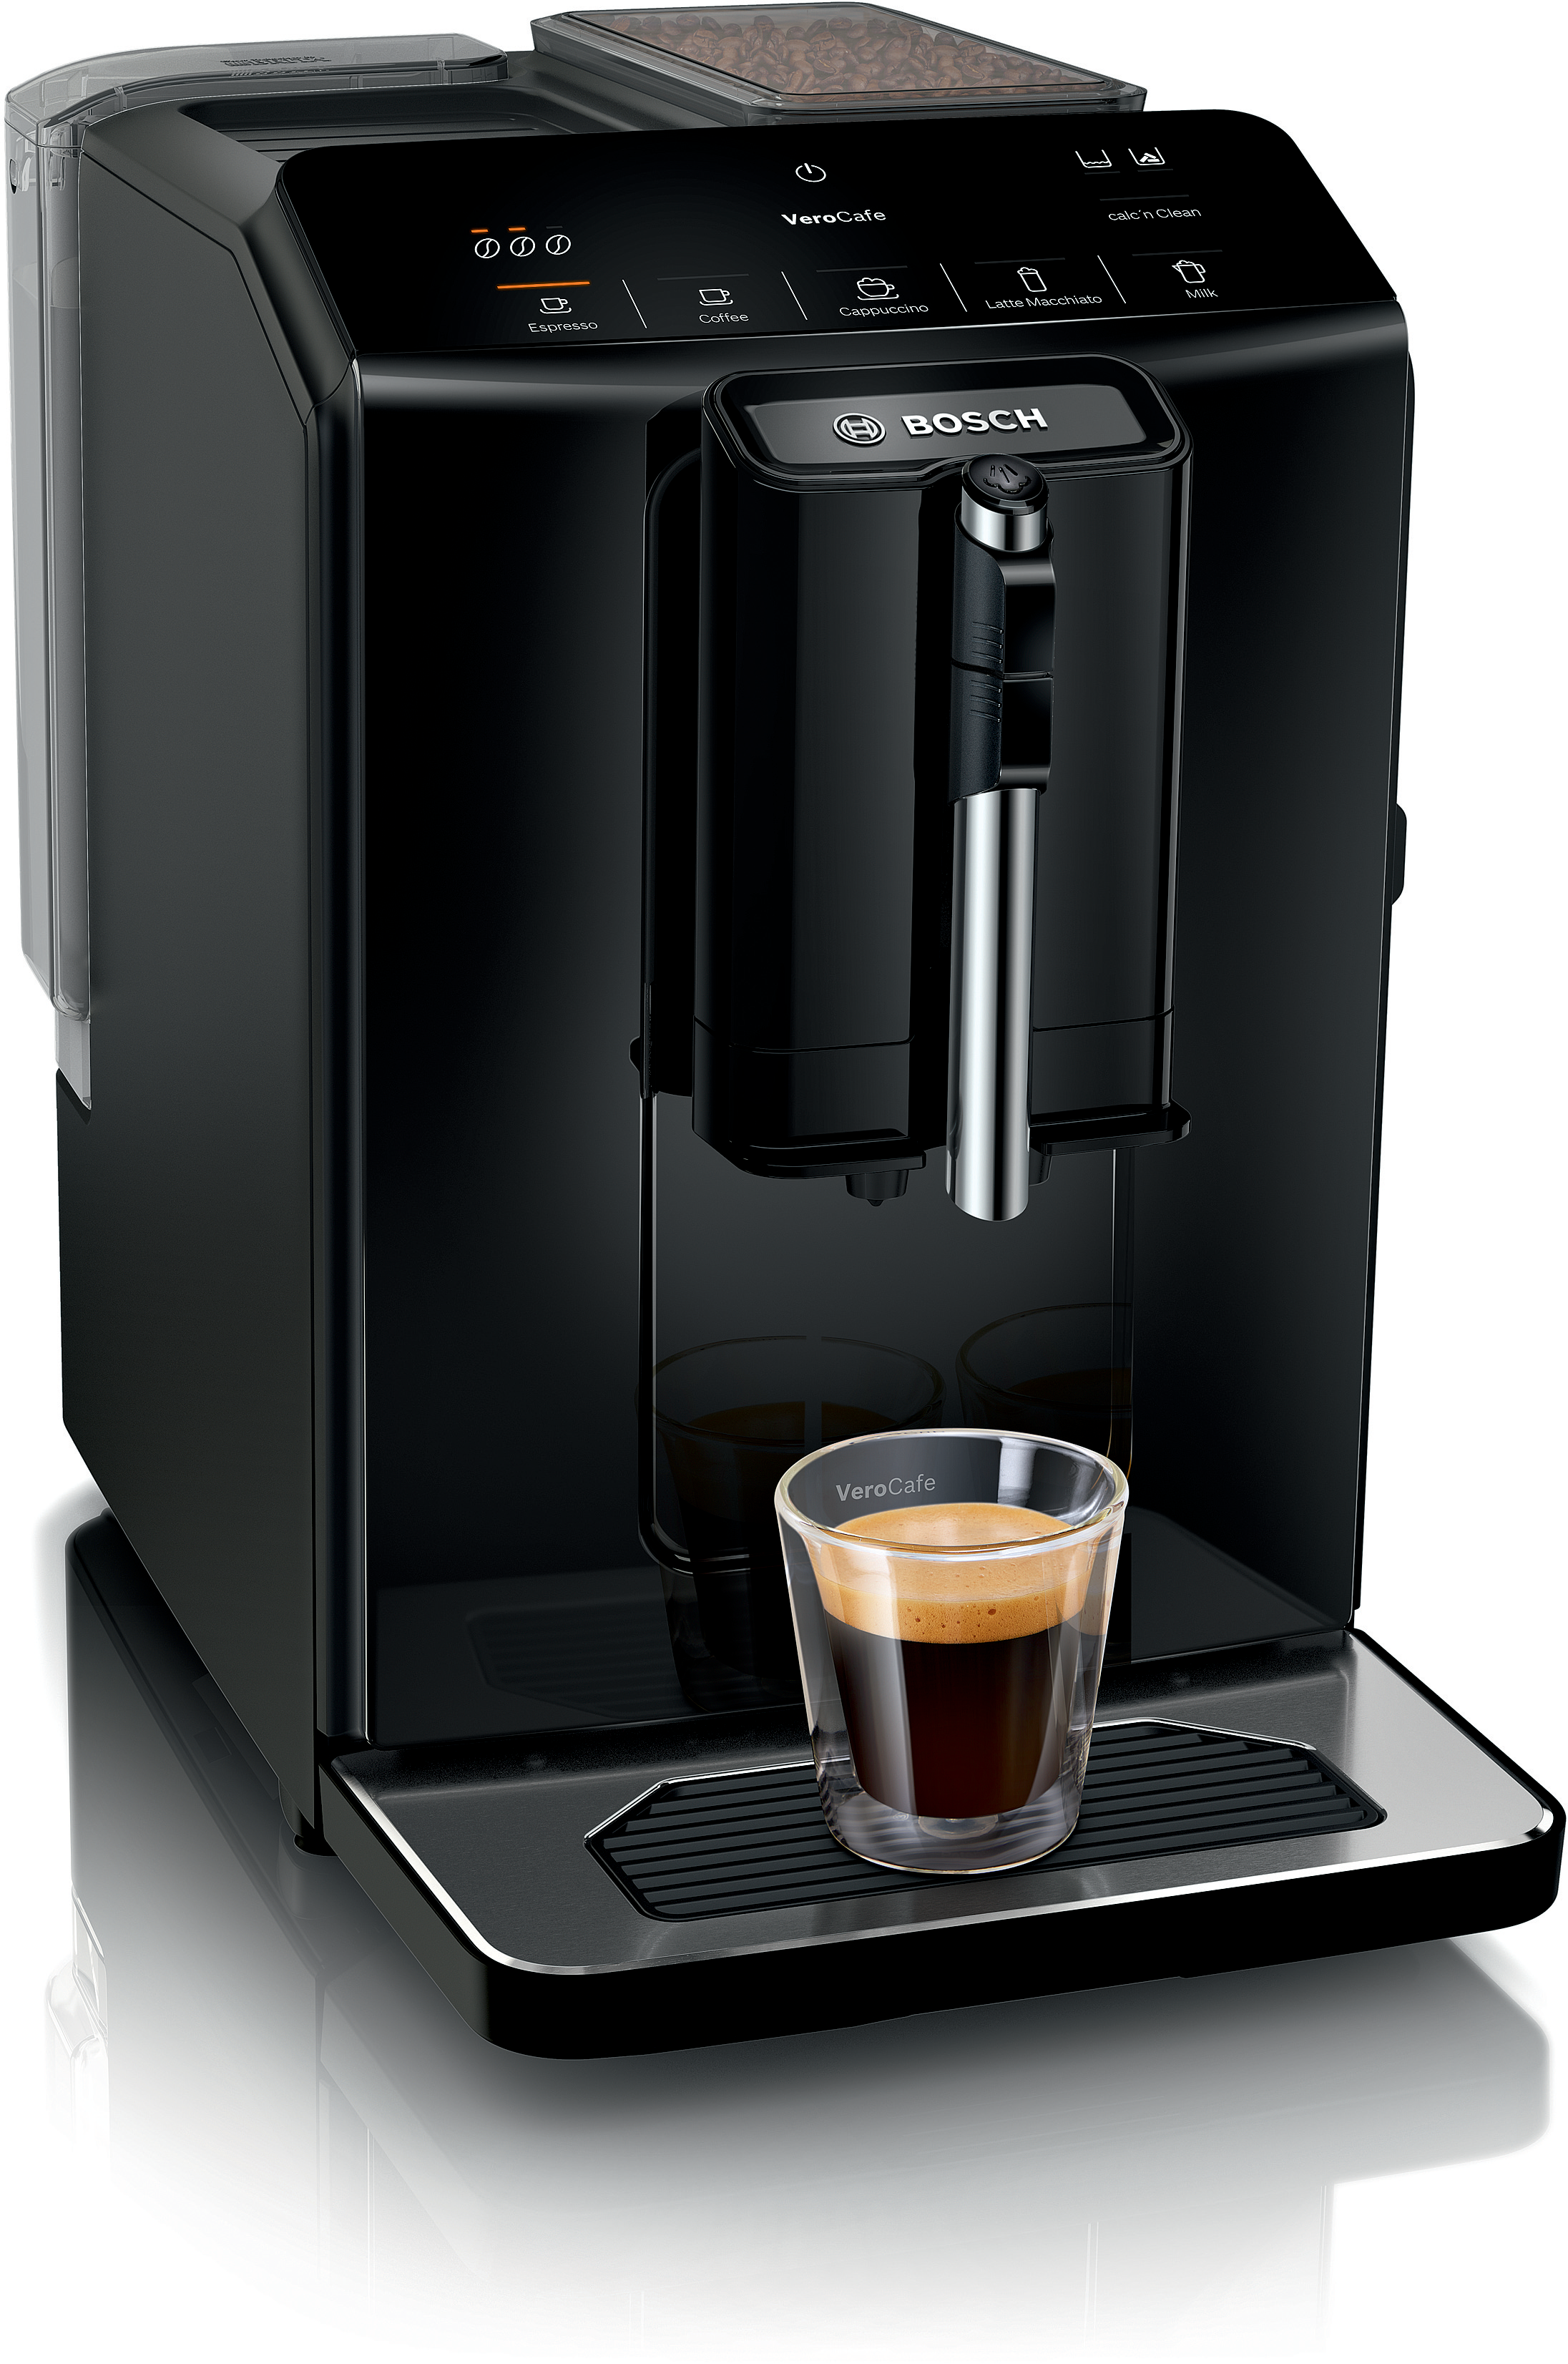 Fully automatic coffee machine, Serie 2 VeroCafe, Piano black, TIE20129